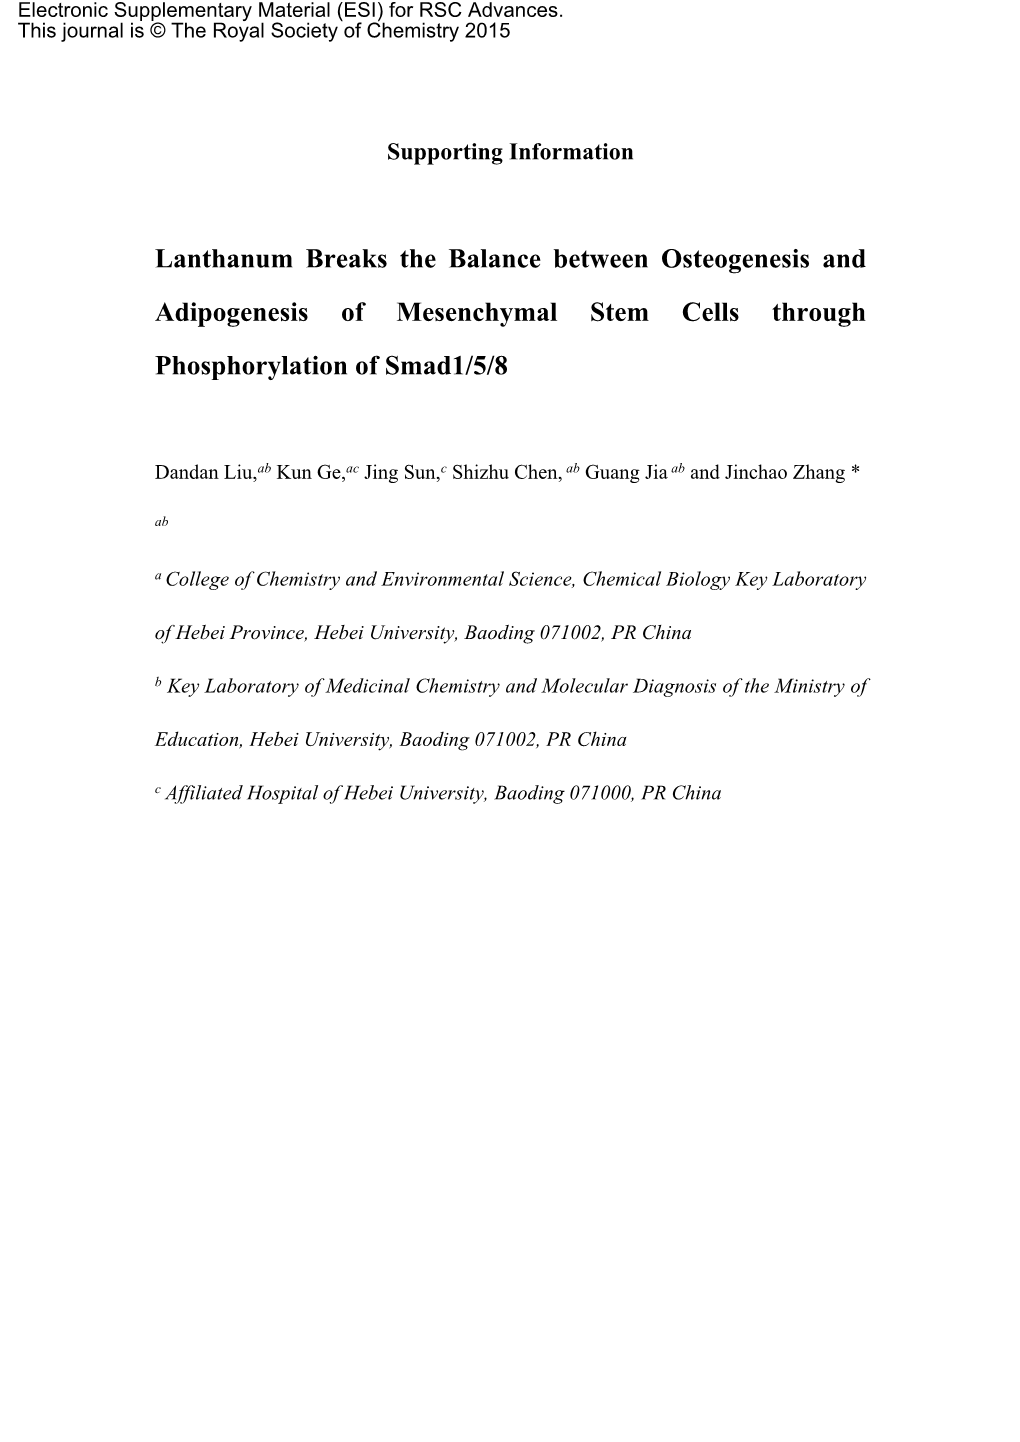 Lanthanum Breaks the Balance Between Osteogenesis and Adipogenesis of Mesenchymal Stem Cells Through Phosphorylation of Smad1/5/8